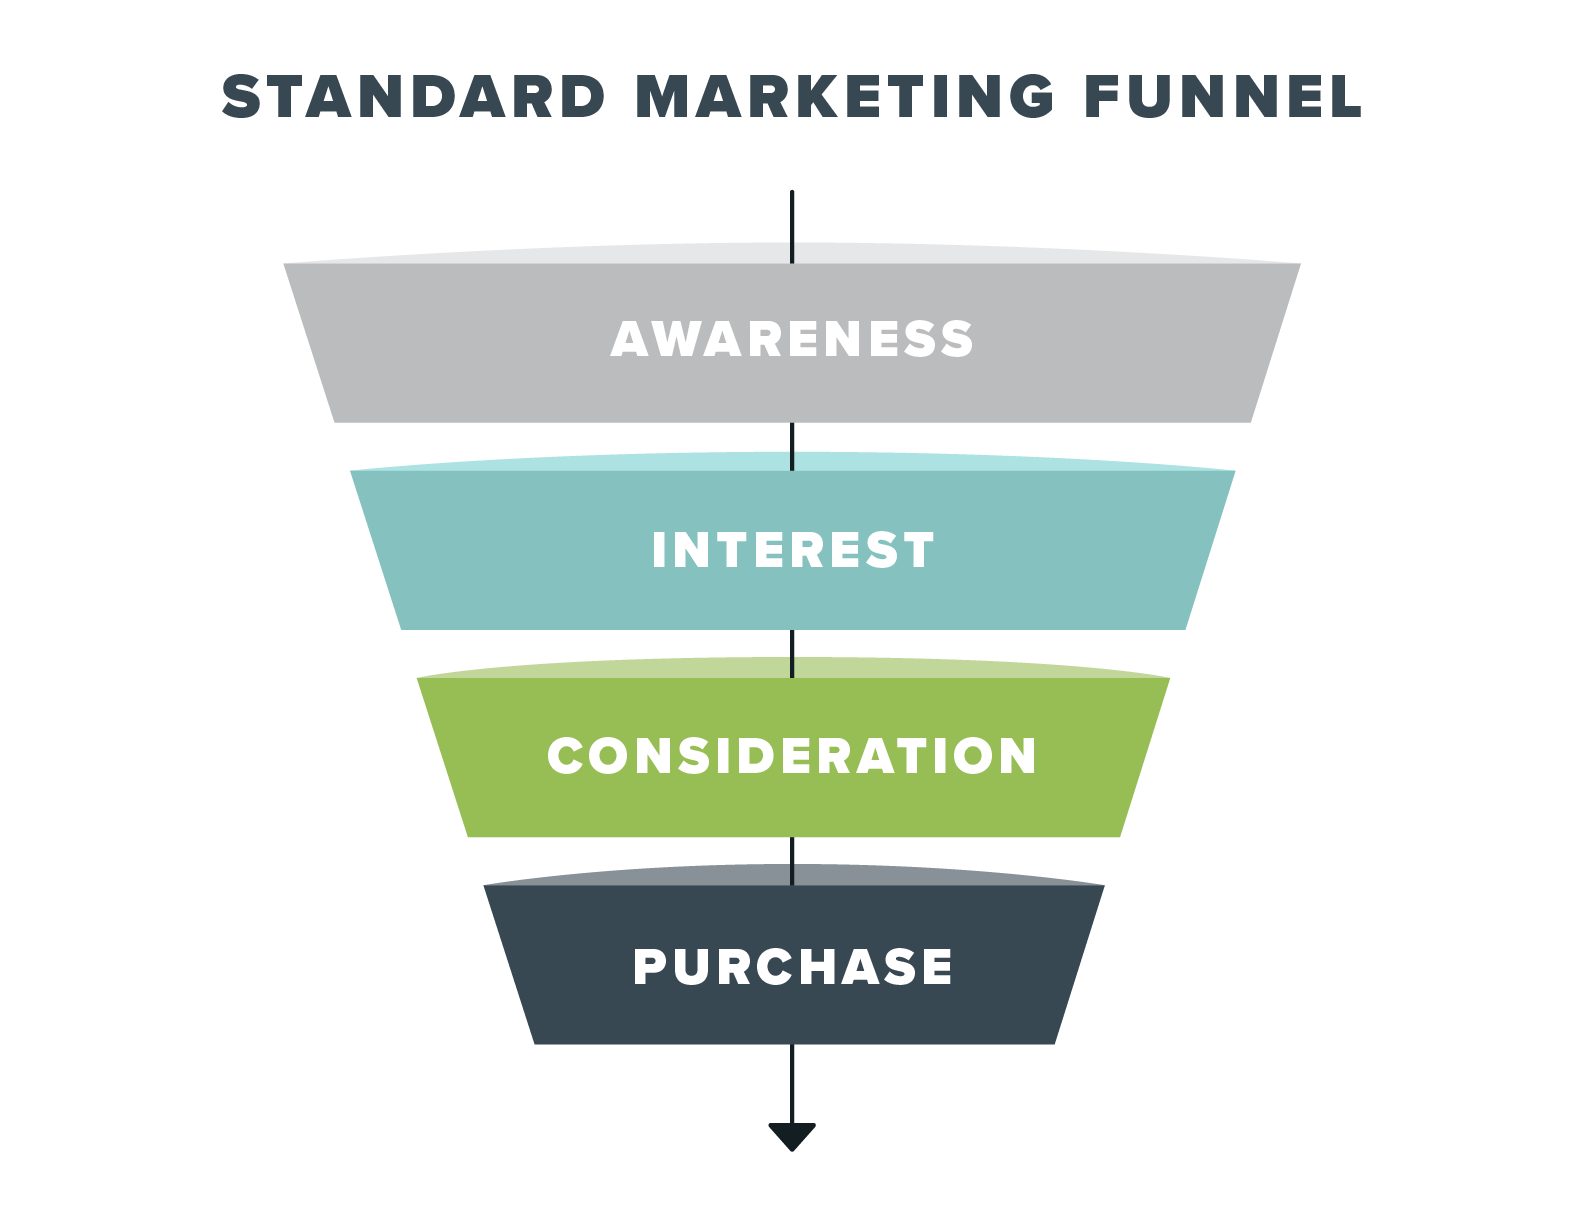 Standard marketing funnel